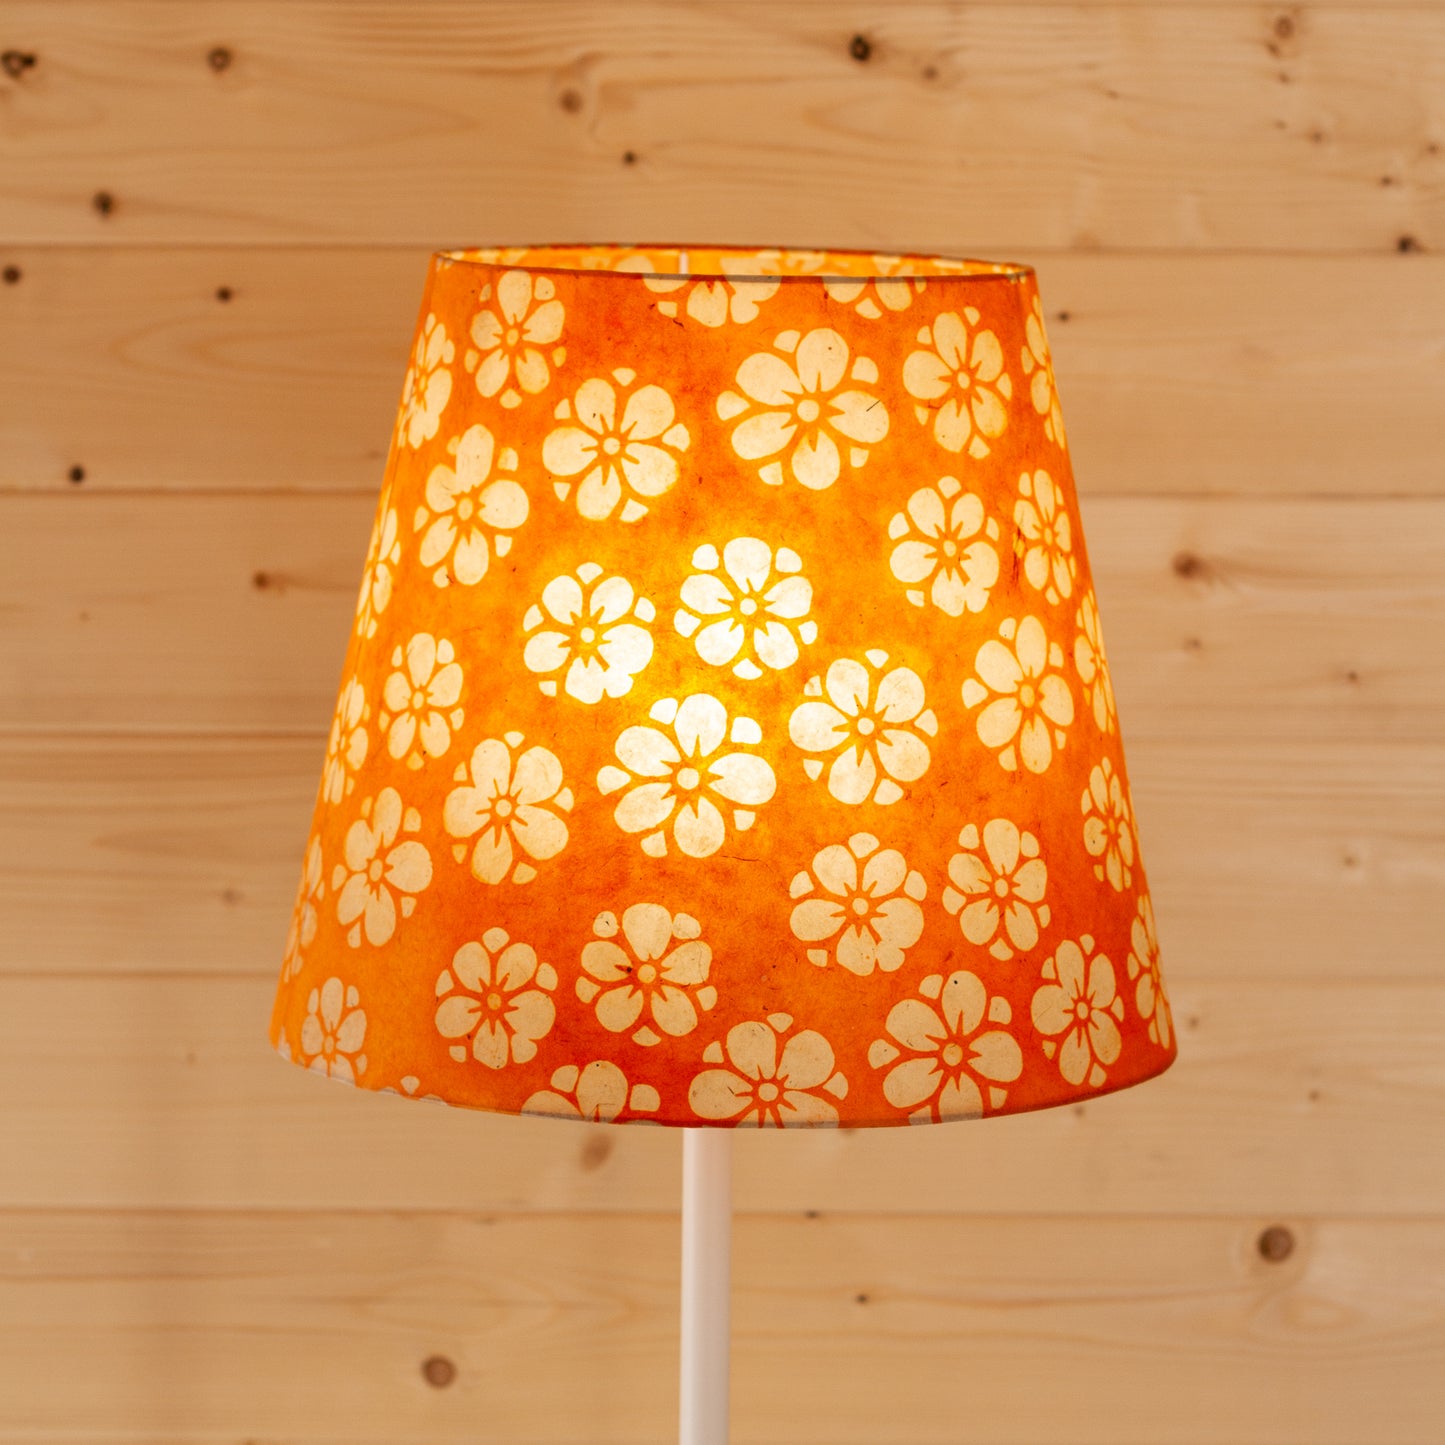 Conical Lamp Shade P94 - Batik Star Flower on Orange, 23cm(top) x 35cm(bottom) x 31cm(height)